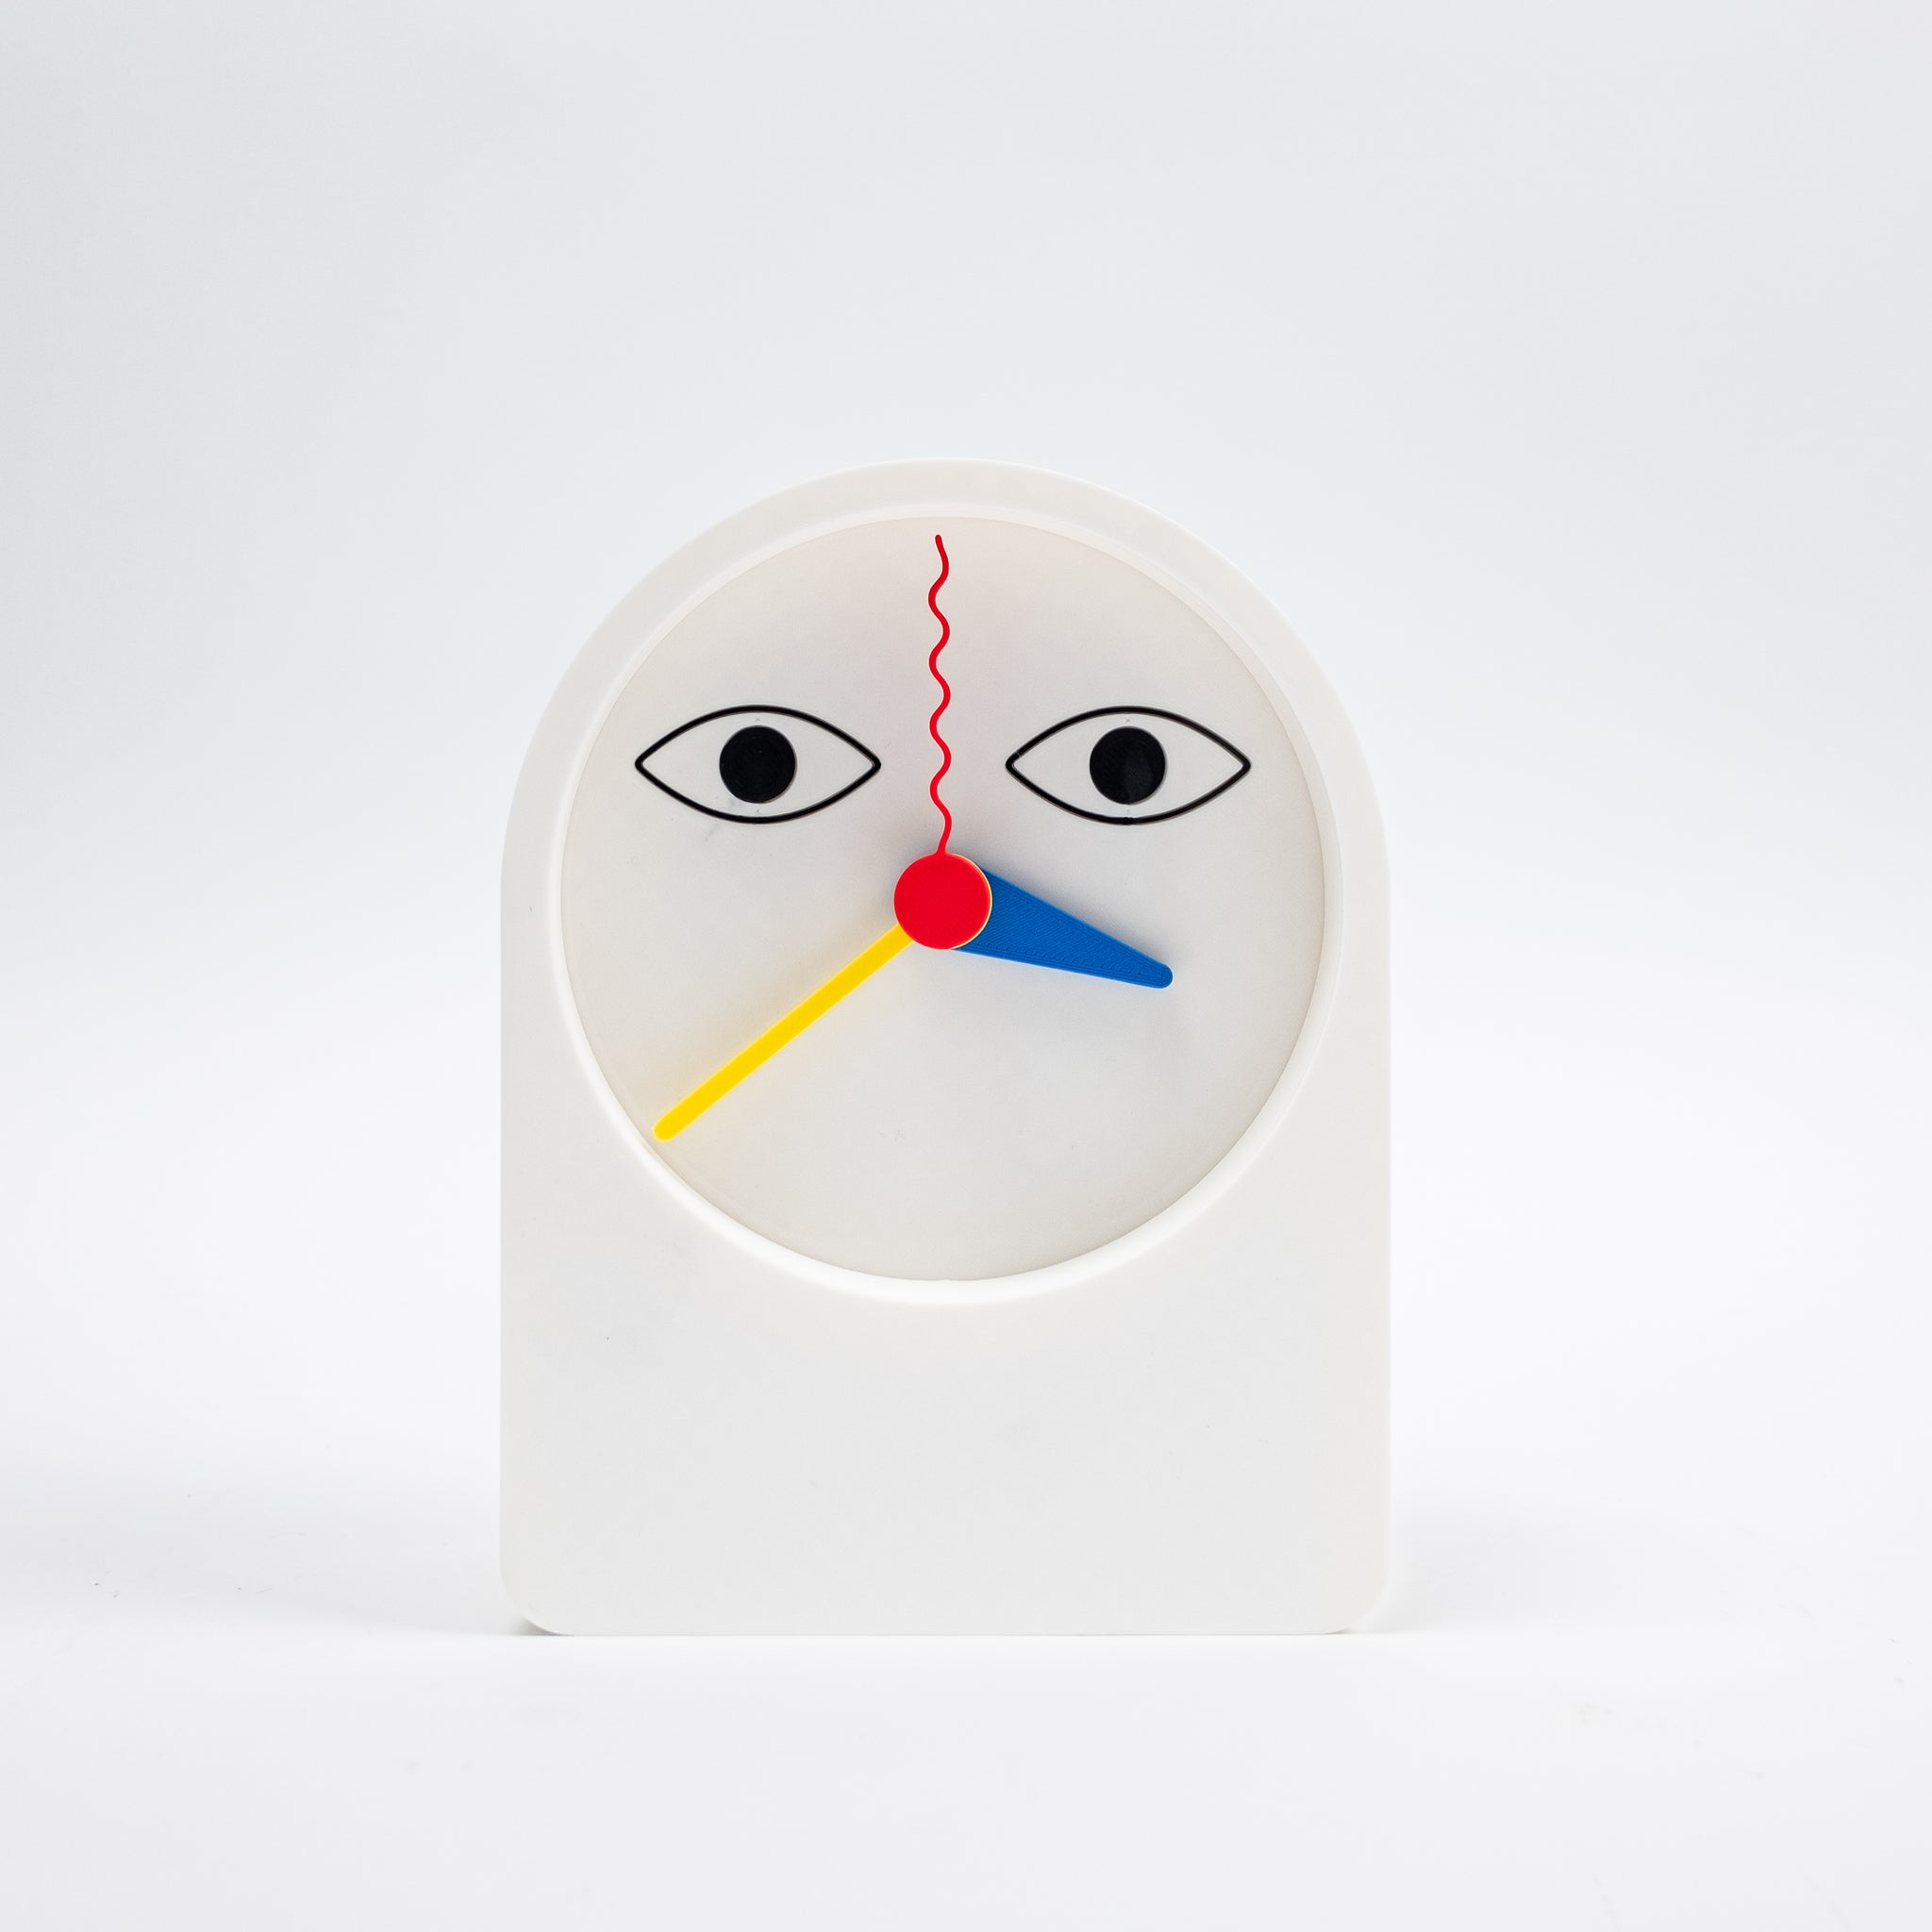 TADASHI, "Face Clock"